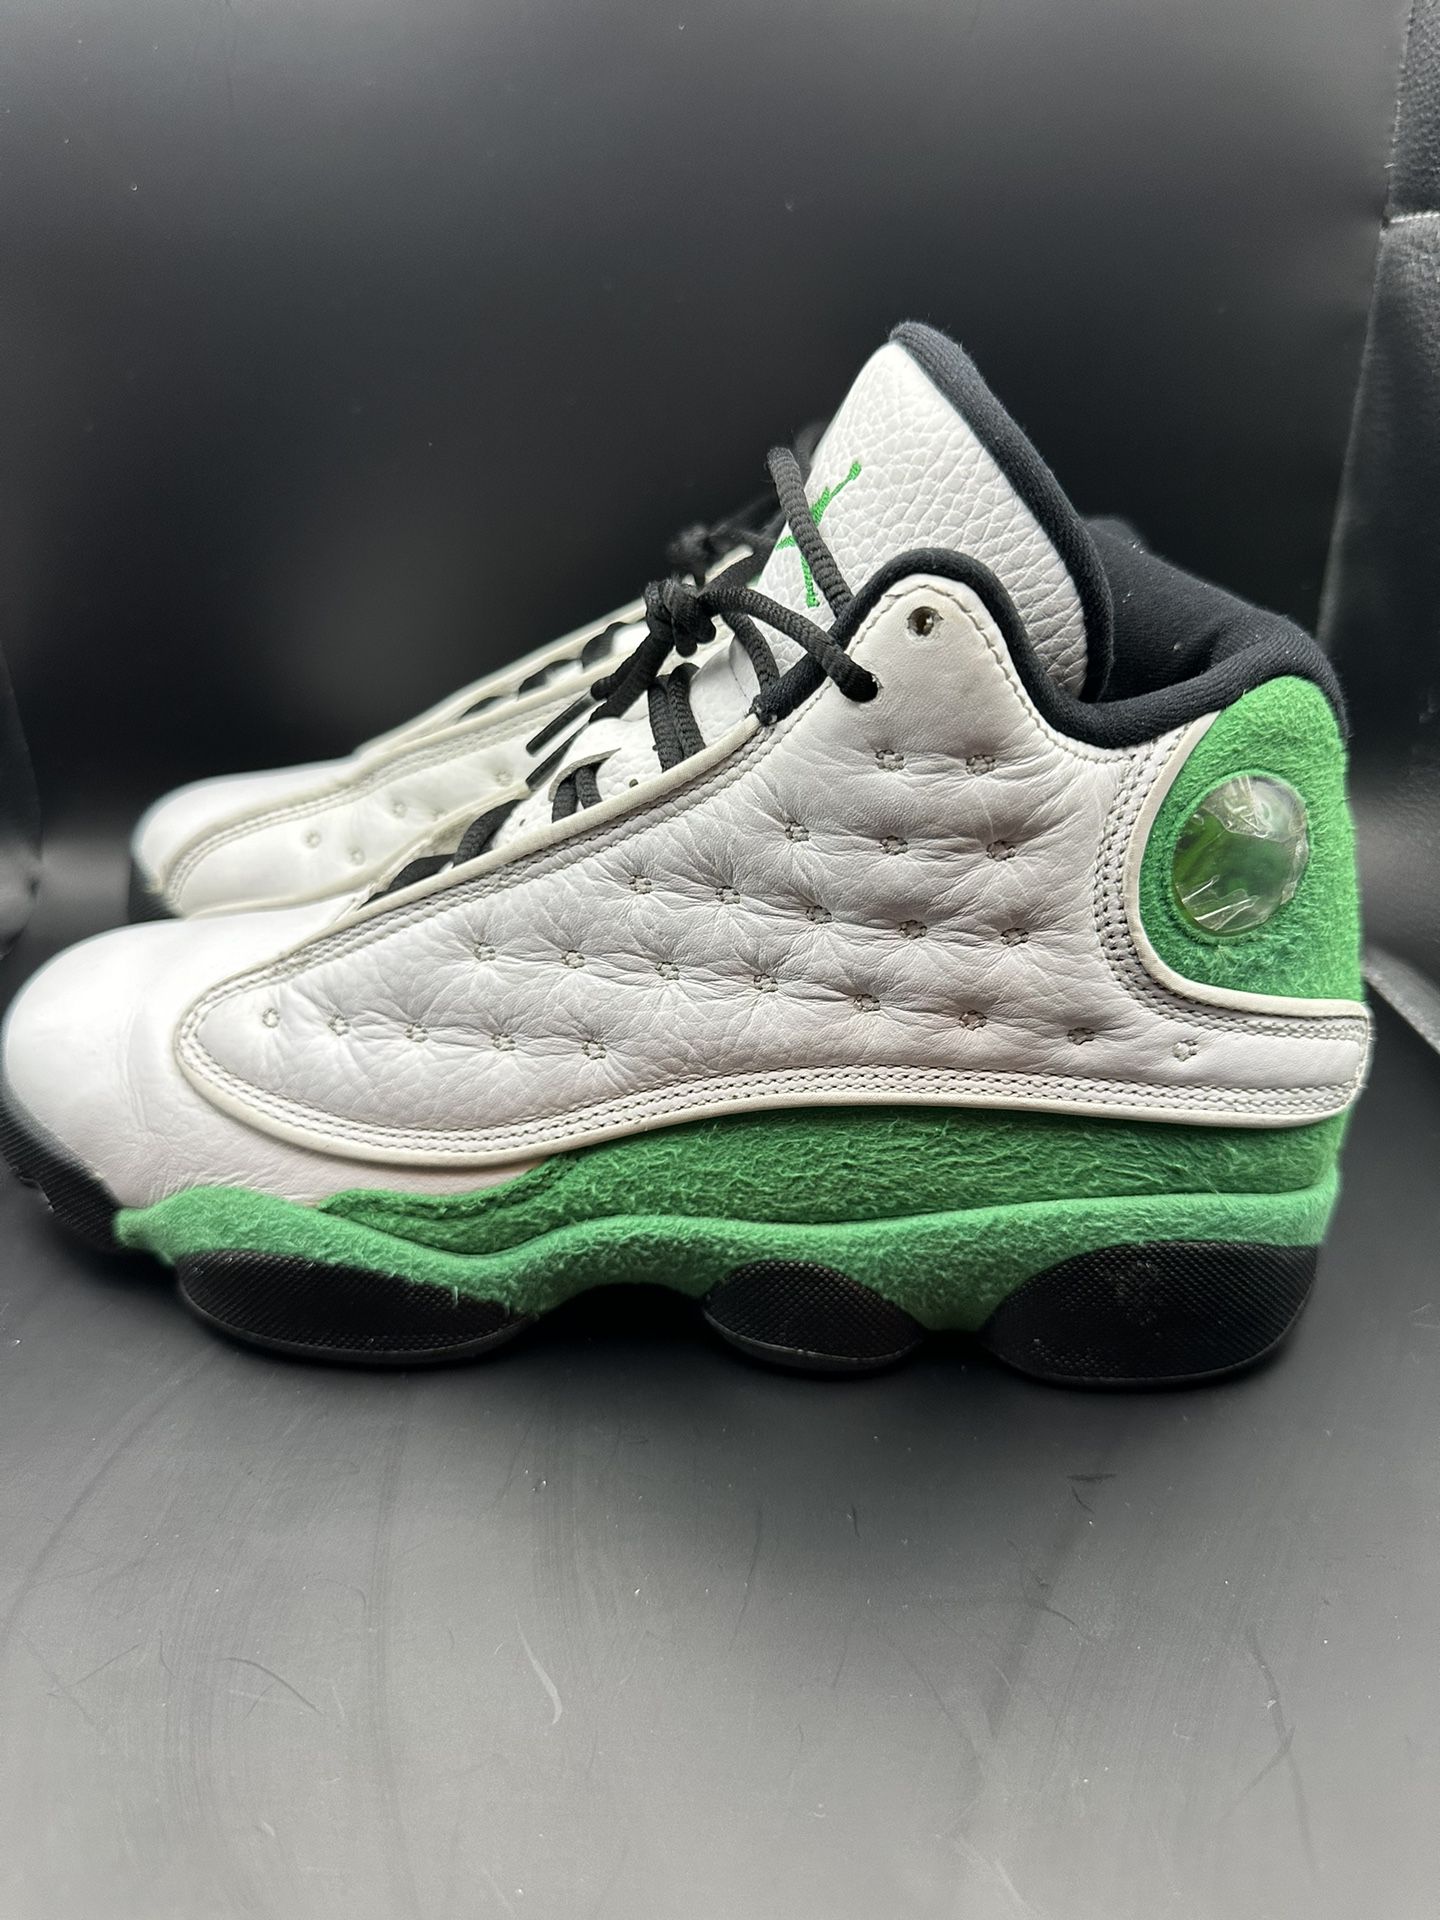 Jordan 13 Retro “Lucky Green” Sz 6.5y/8w